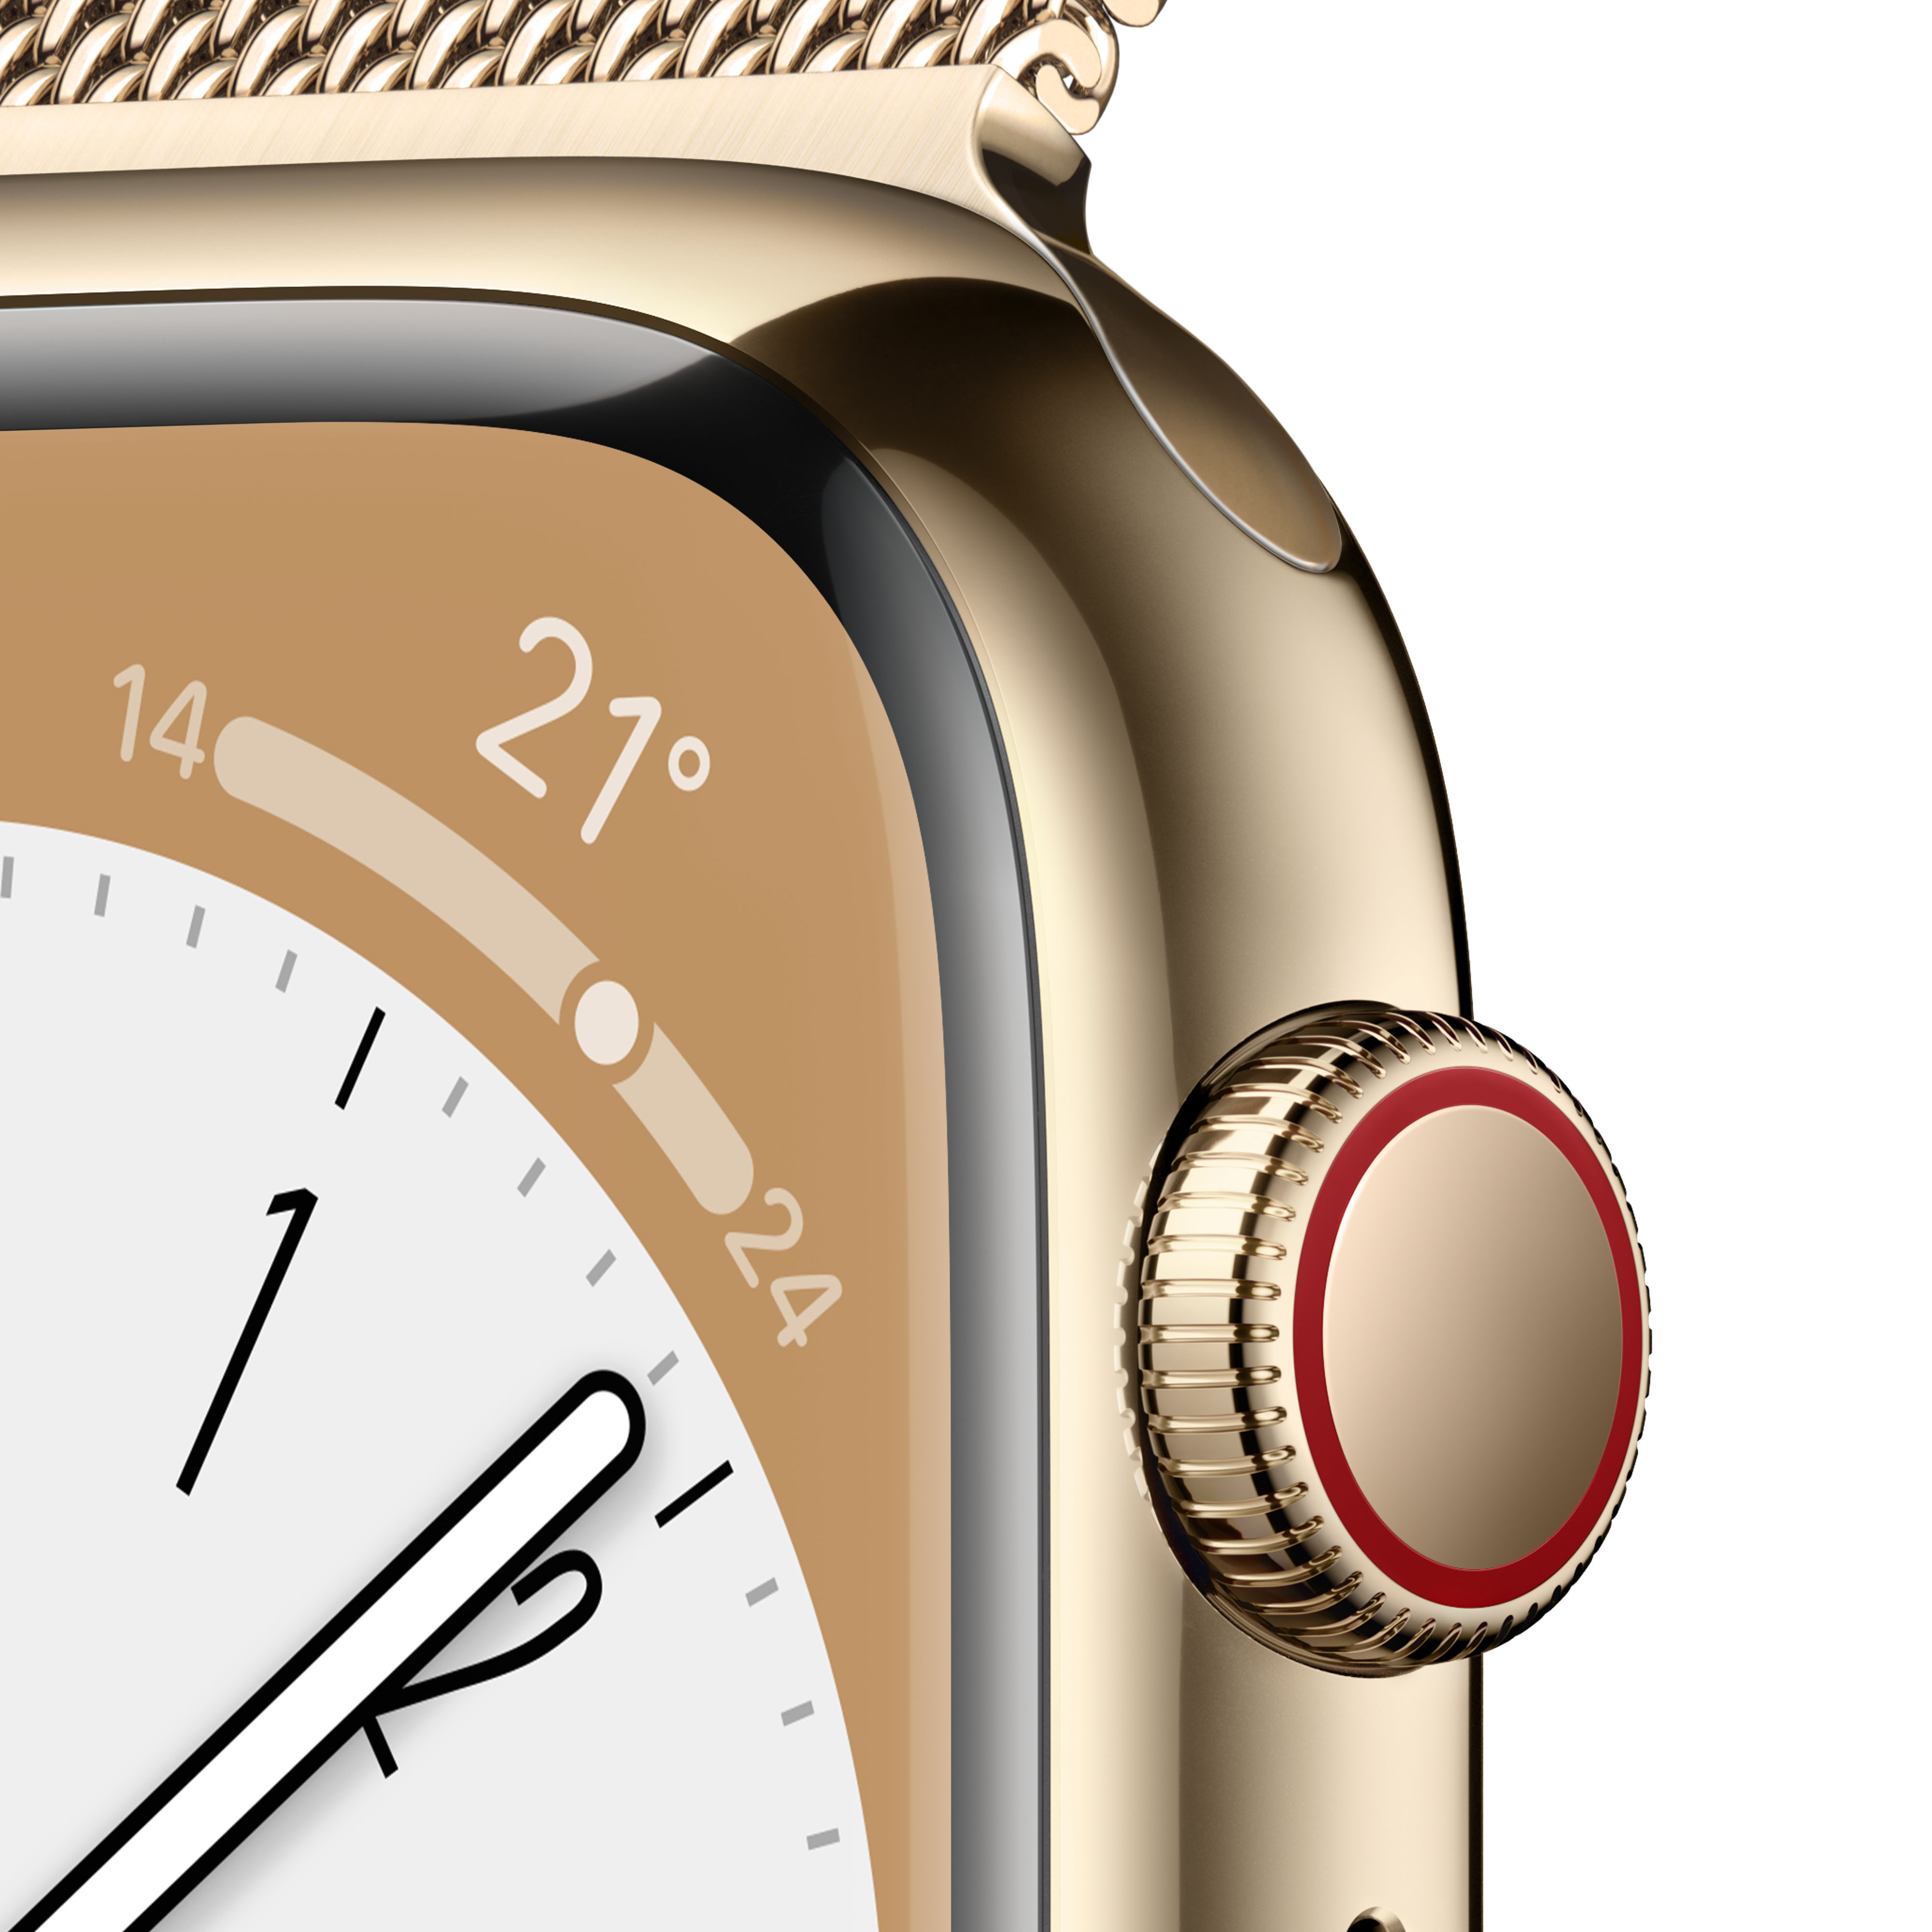 APPLE Watch Series 8 (GPS Gold - Cellular) 130 200 Milanaise, 41 Edelstahl mm + Gold, Armband: Smartwatch mm, Gehäuse